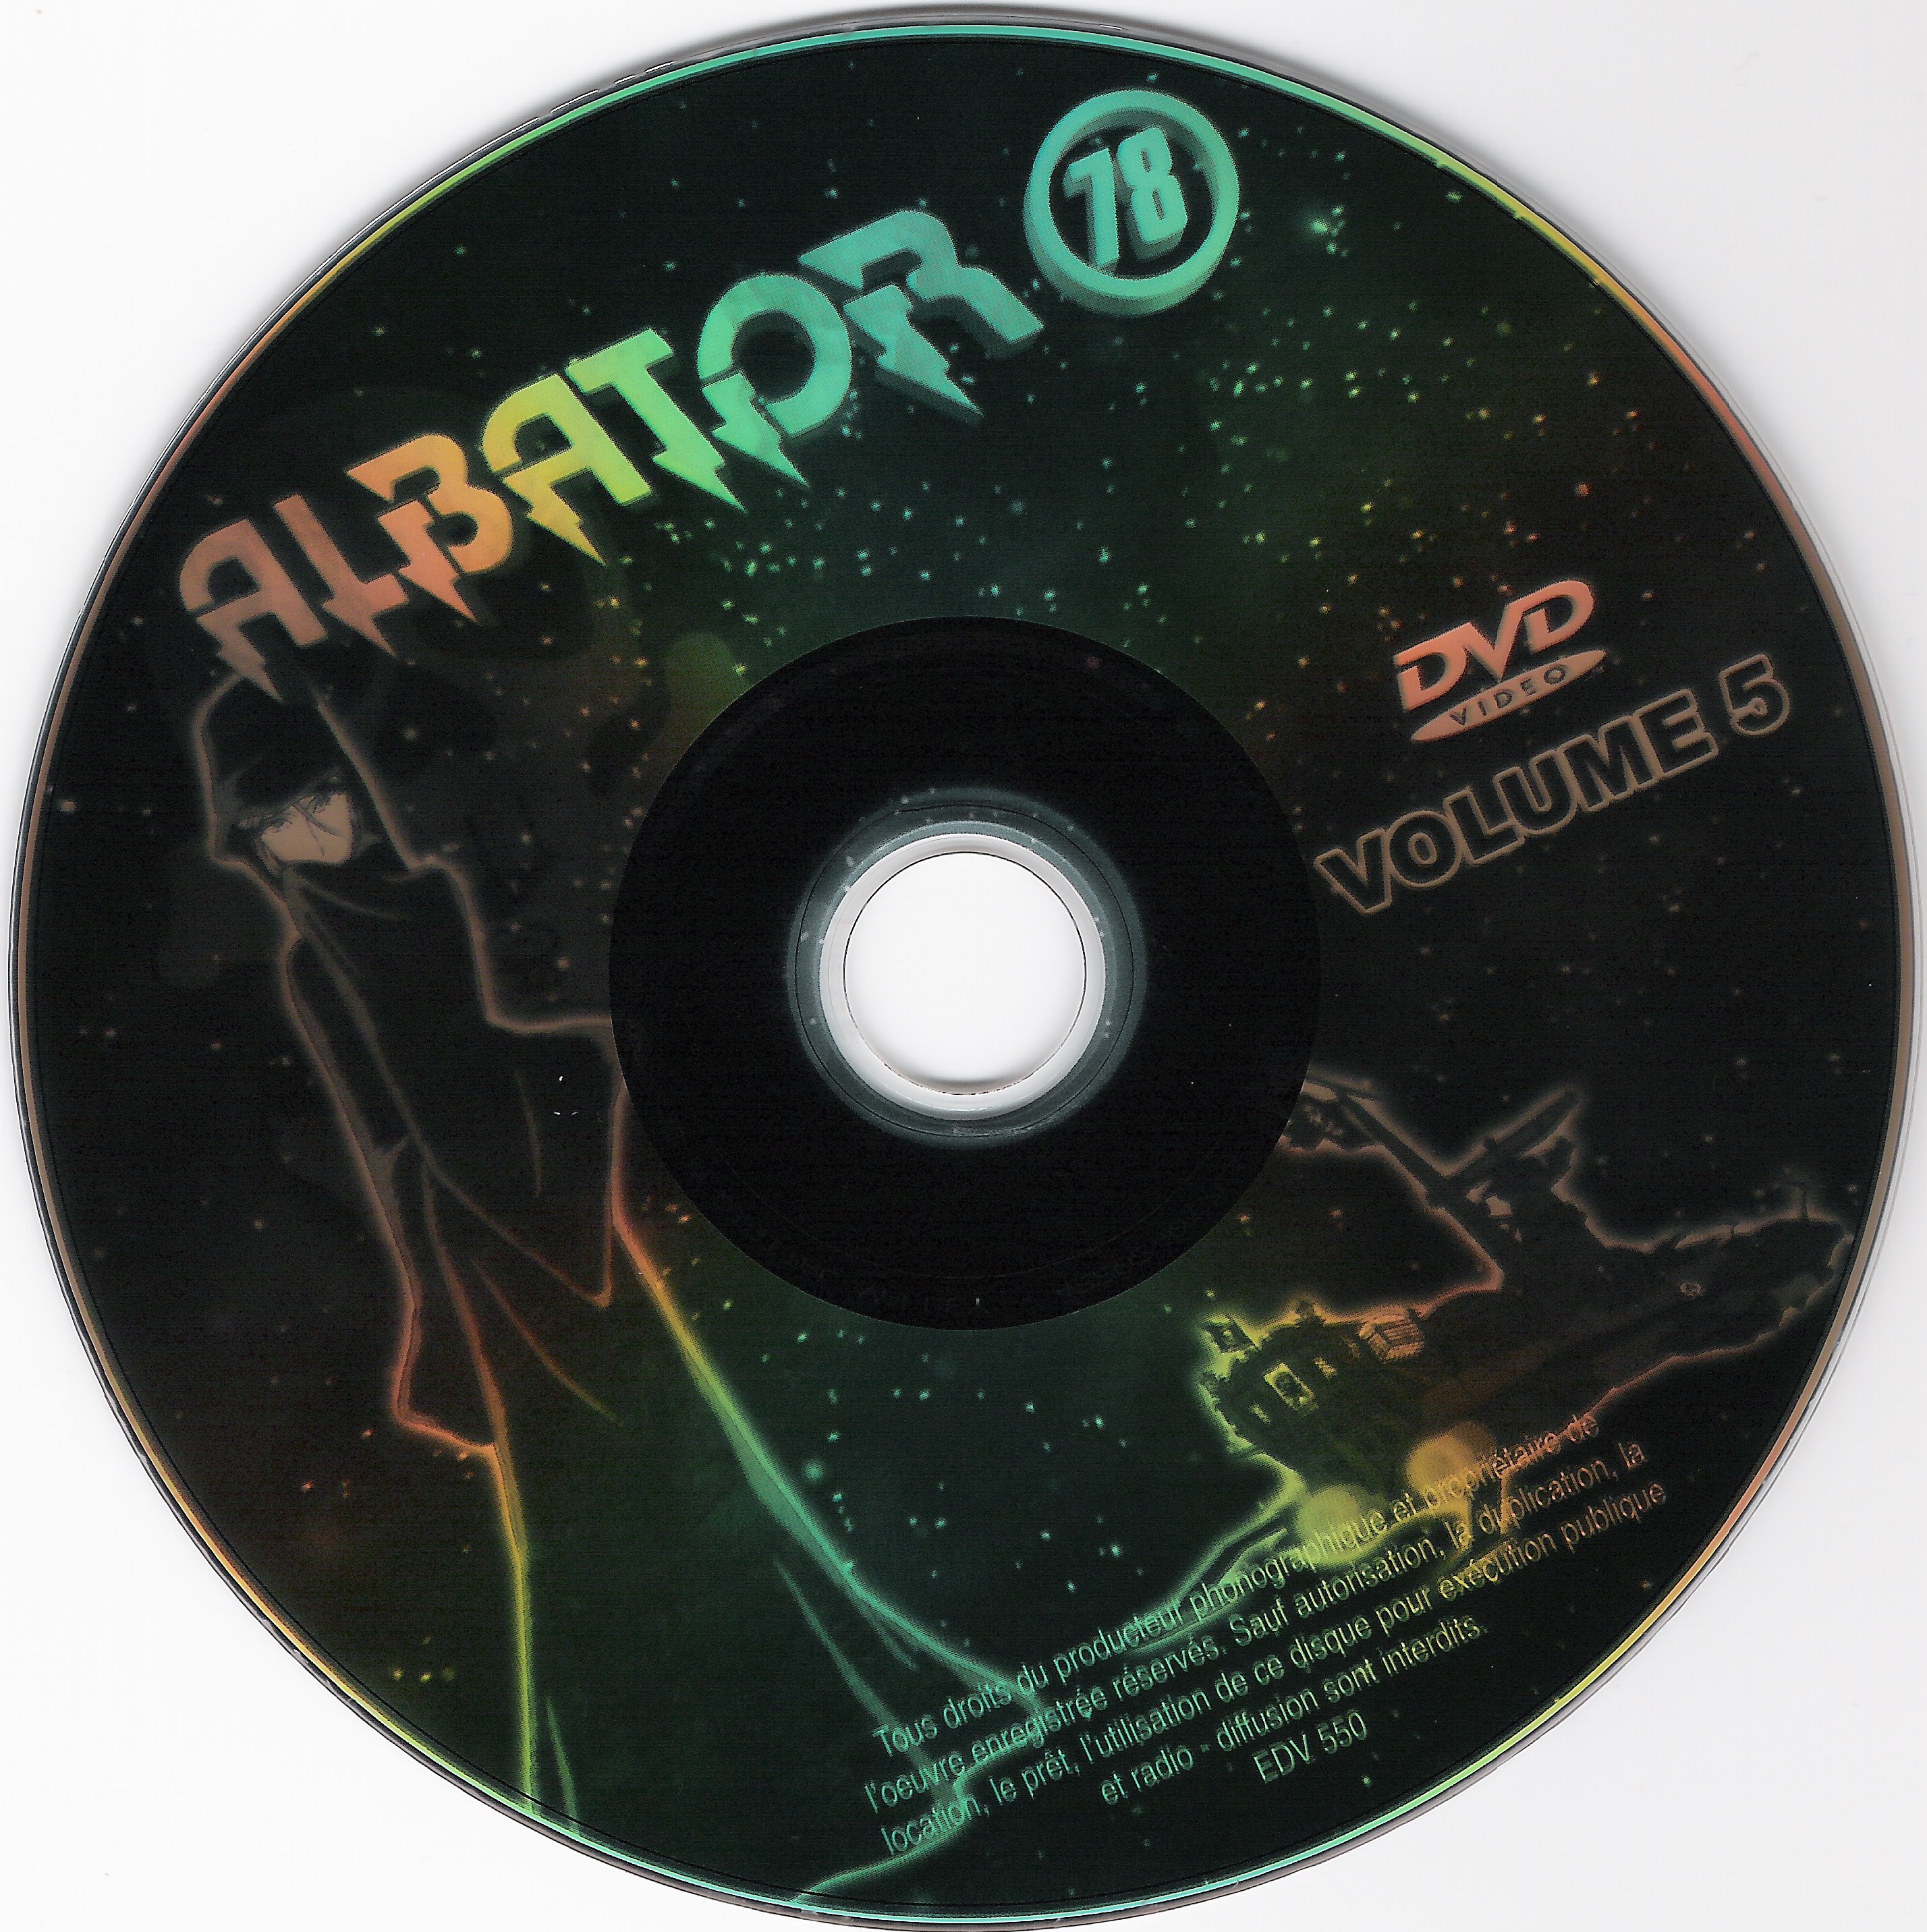 Albator 78 vol 5 (GENERATION DVD)